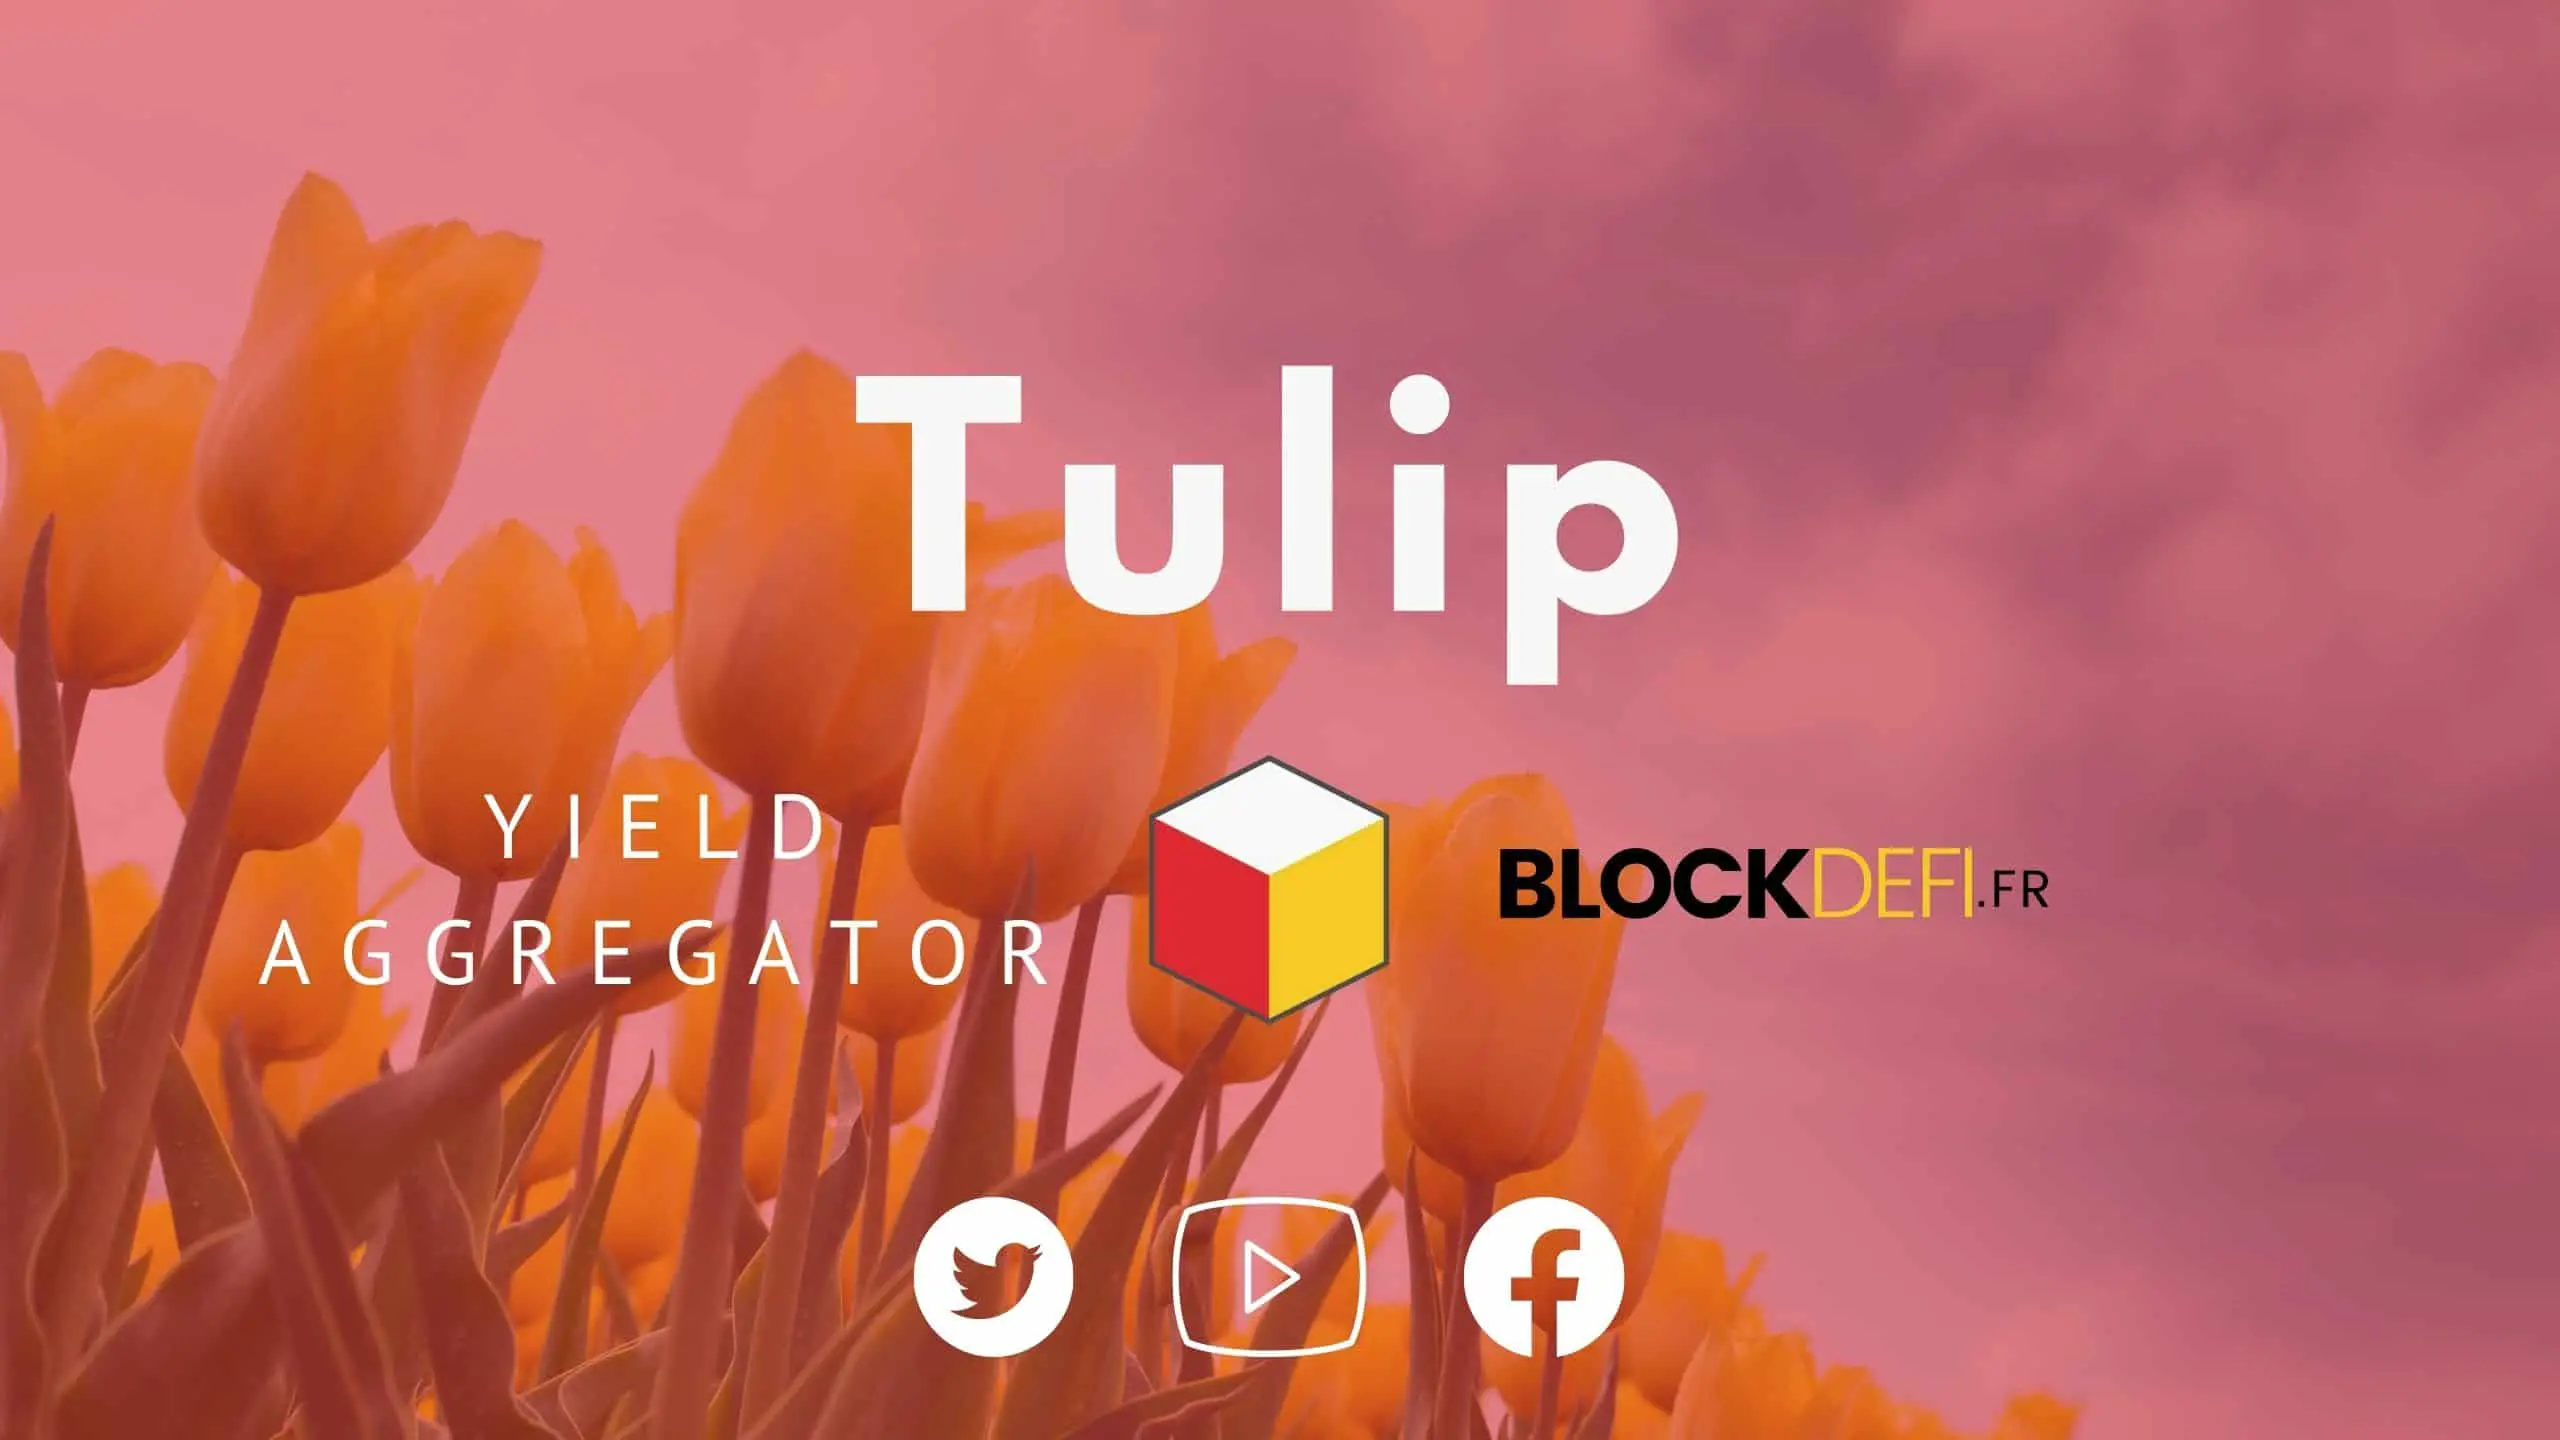 Tulip-Yield-aggregator-solana